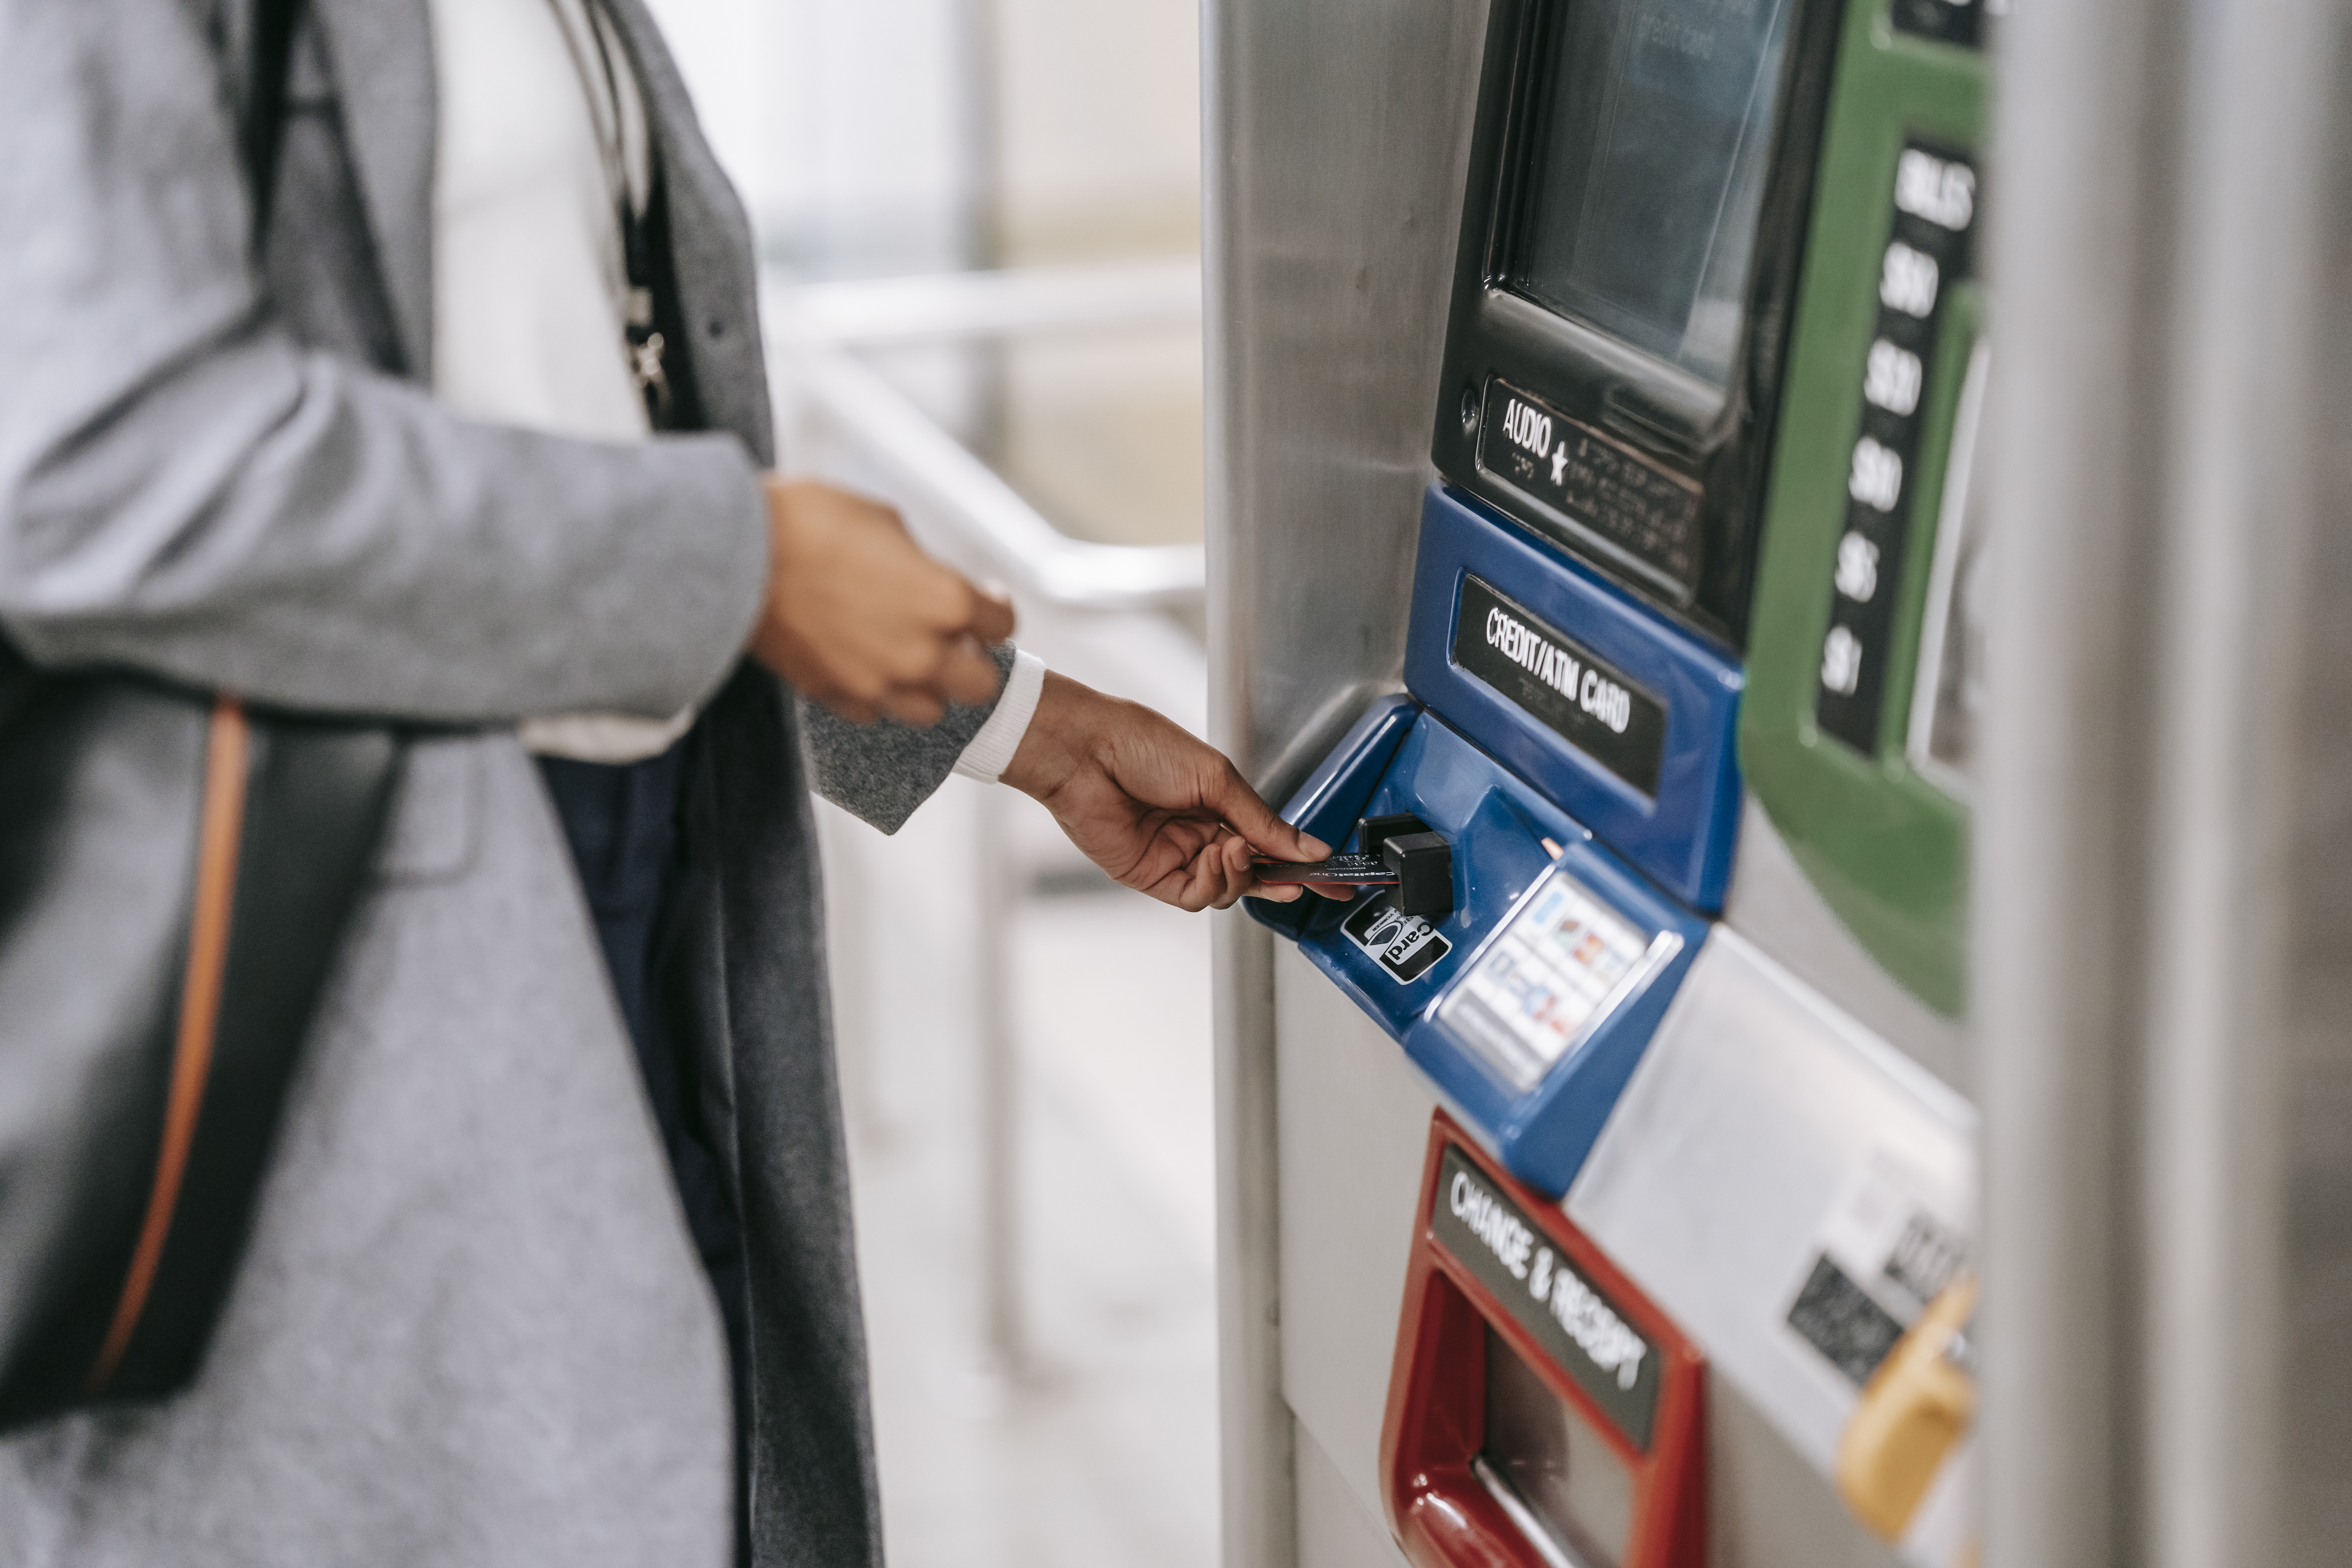 Daftar sms banking bisa melalui mesin ATM.